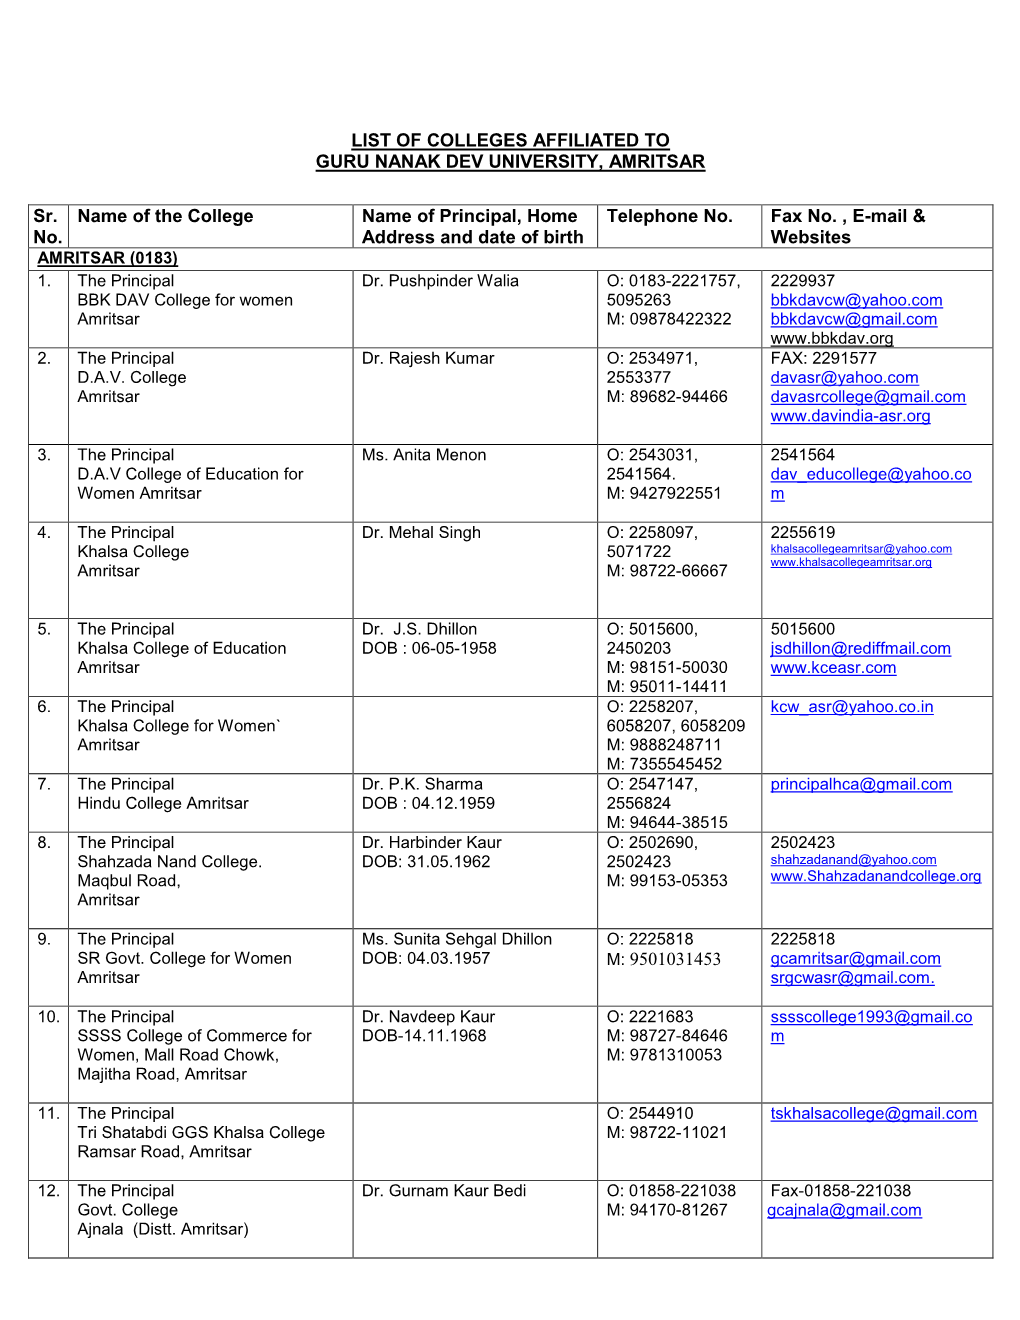 List of Colleges Affiliated to Guru Nanak Dev University, Amritsar